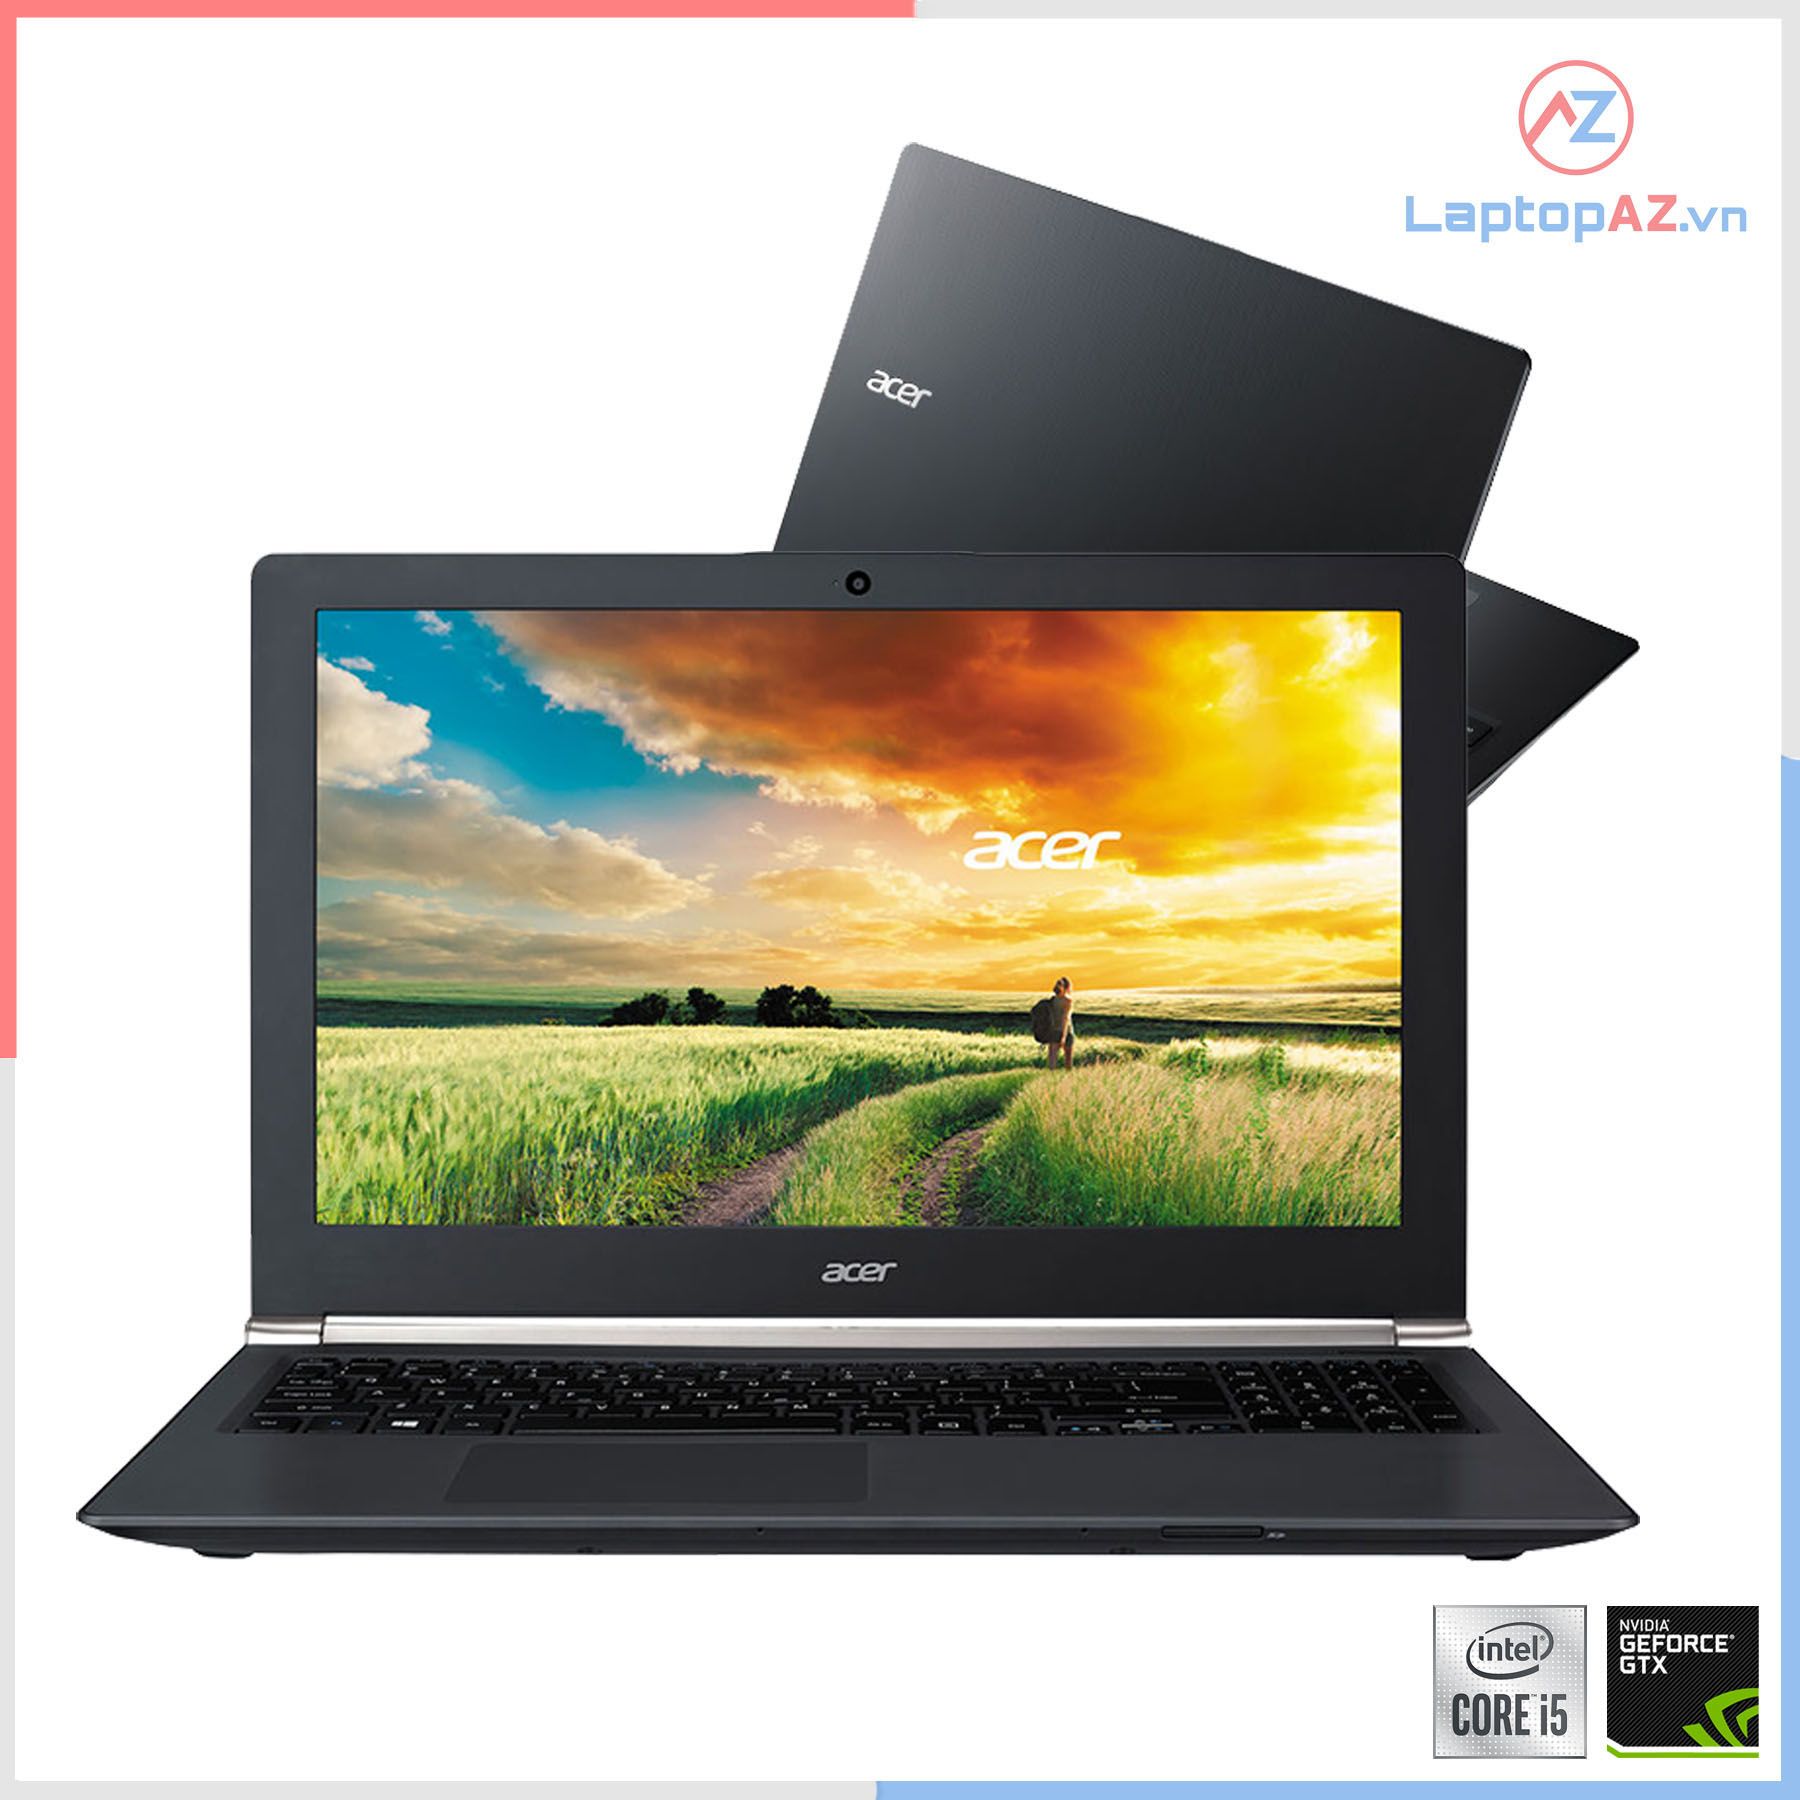 Laptop Acer Nitro VN7 571G-58CT (Core i5-5200U, 4GB, 1TB, VGA 4GB GTX 850M, 15.6 inch FHD)